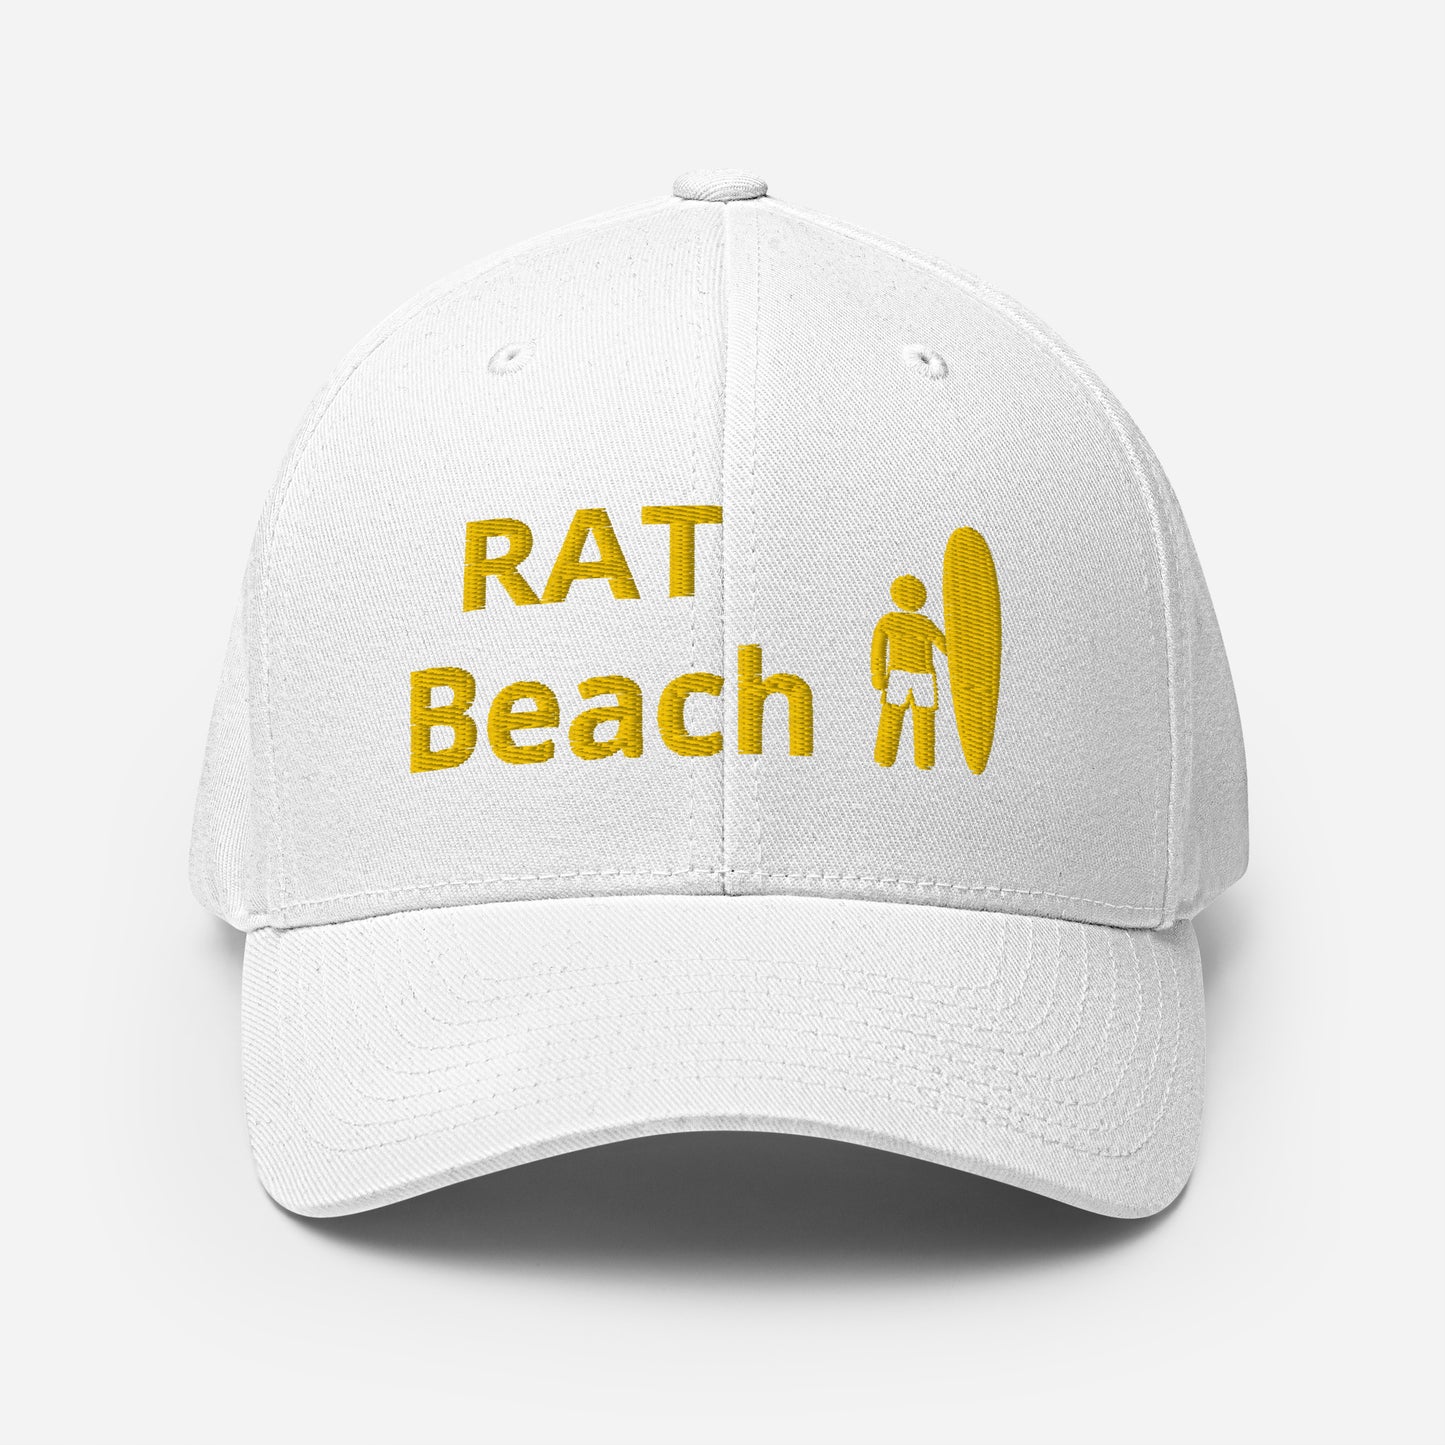 RAT Beach Torrance California - Structured Twill Cap